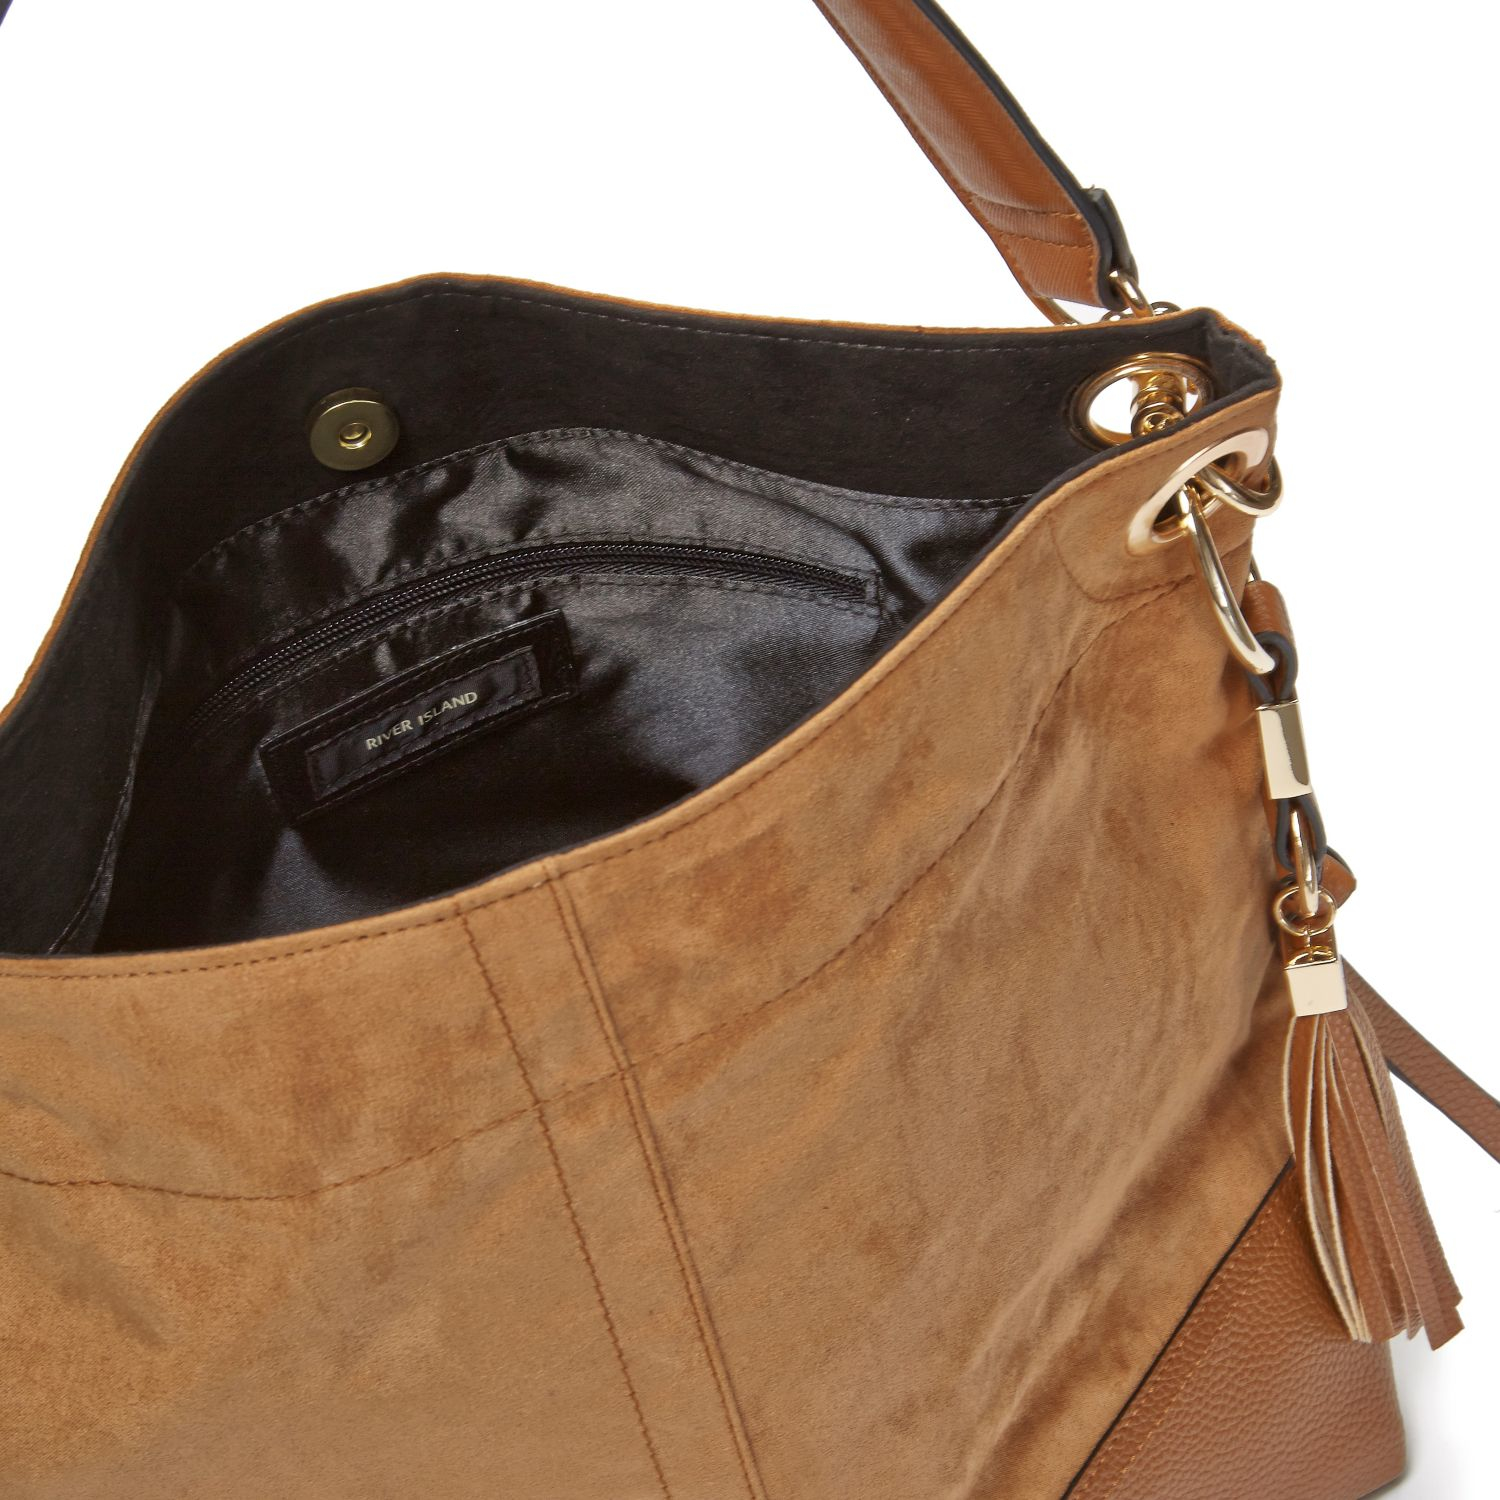 River Island Beige Tassel Slouch Handbag in Brown - Lyst